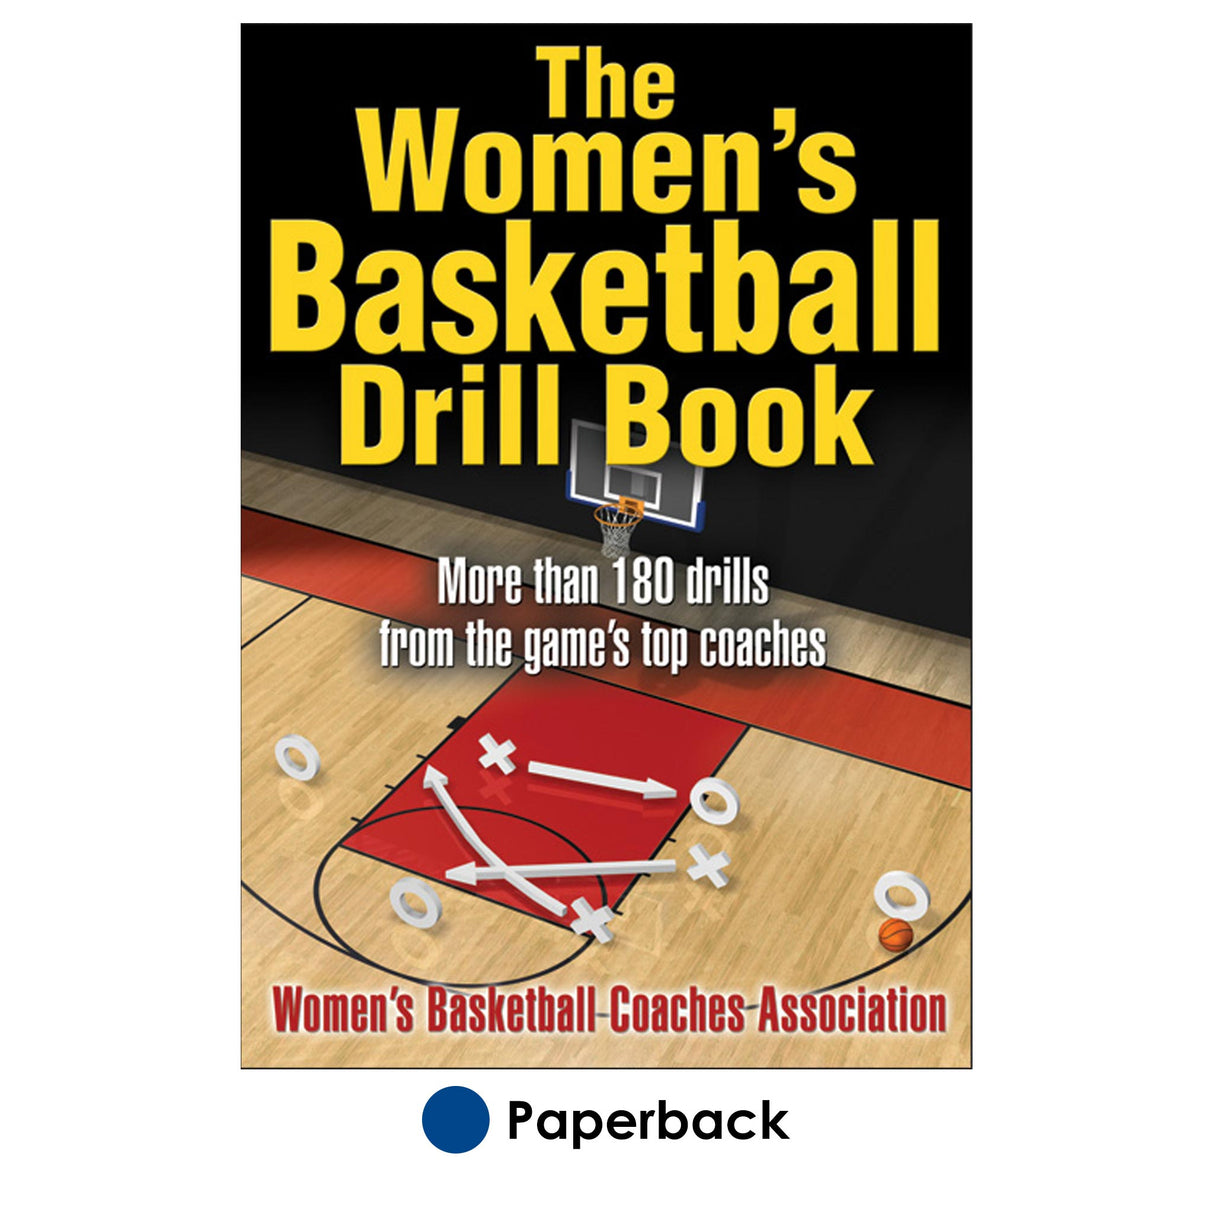 Women's Basketball Drill Book, The